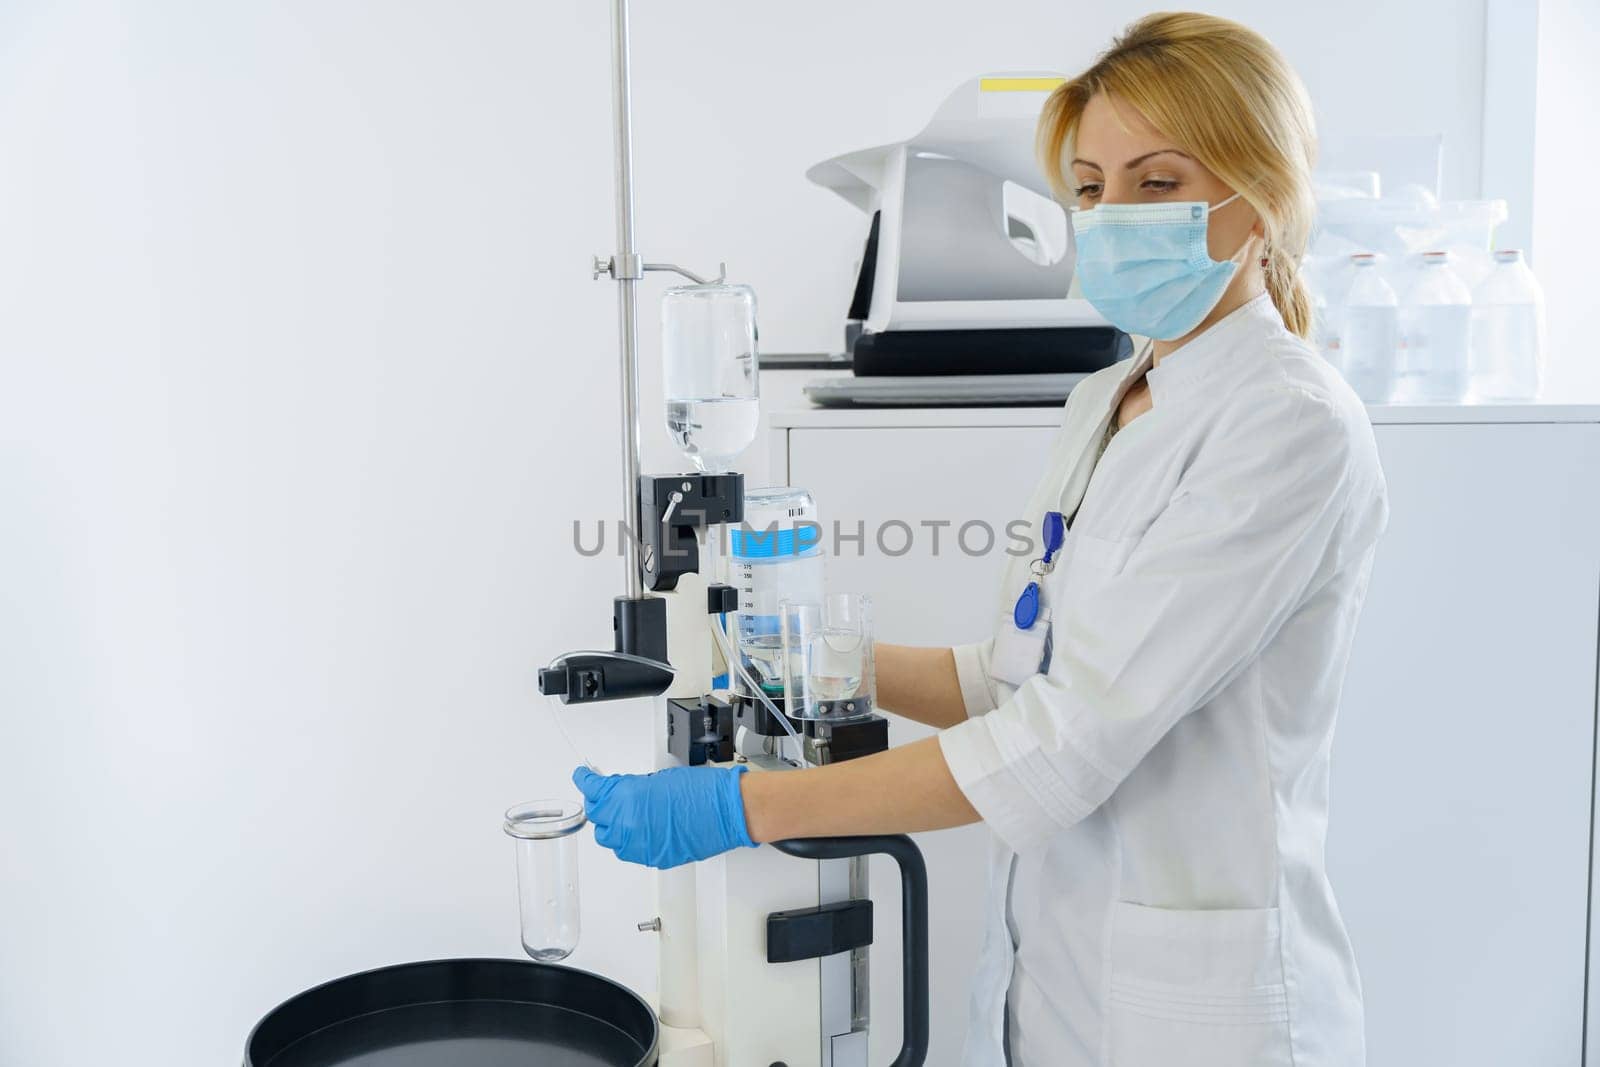 Woman technologist preparing CT Scan Machine in hospital before procedure by Yaroslav_astakhov